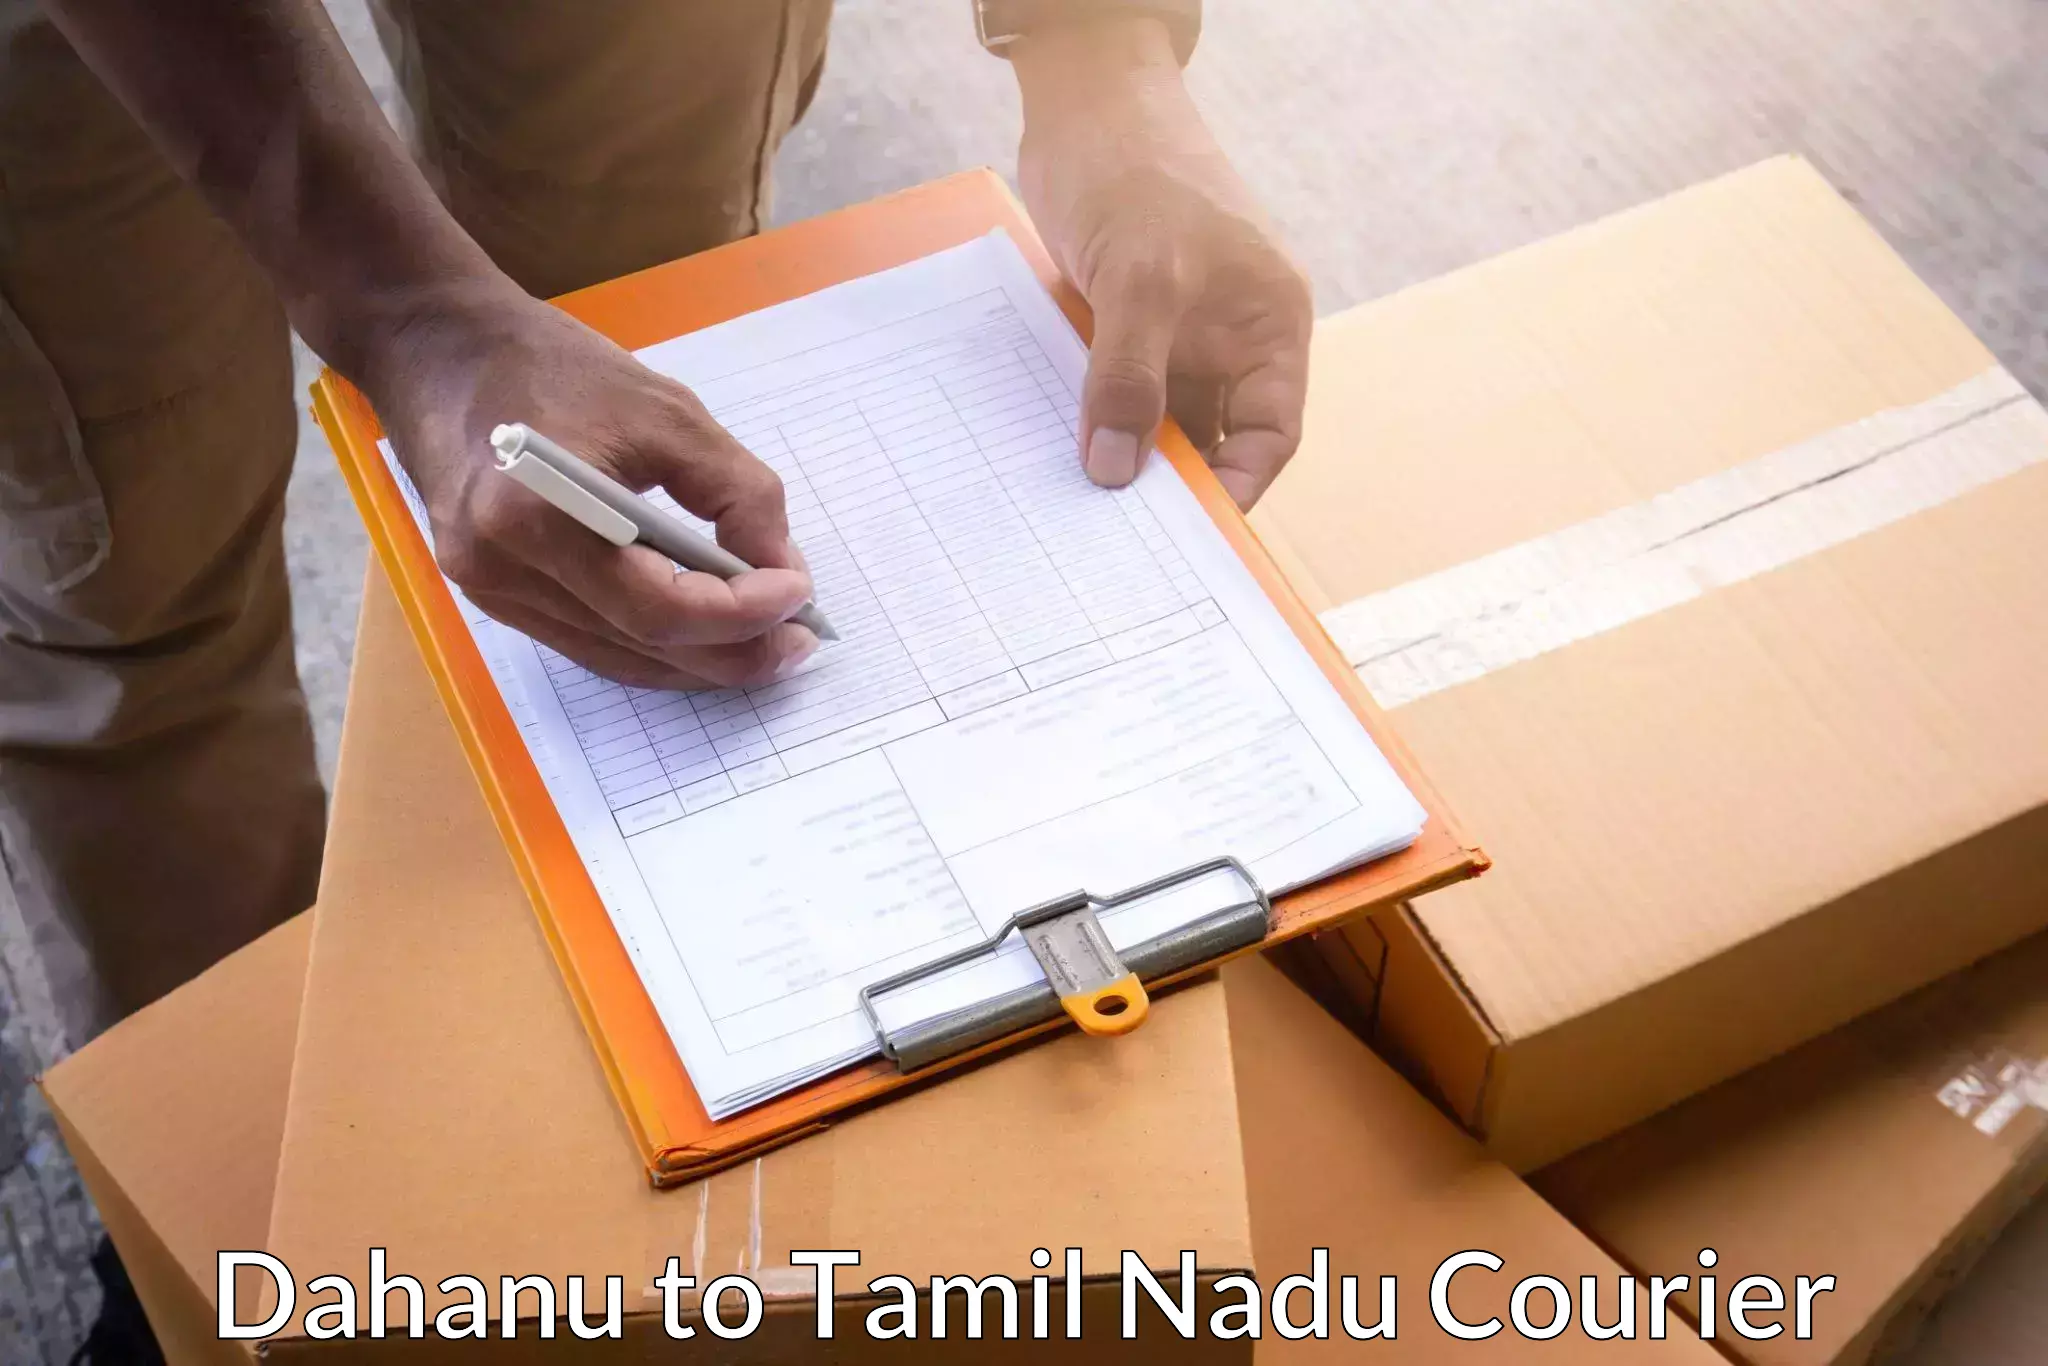 Nationwide delivery network Dahanu to Tamil Nadu